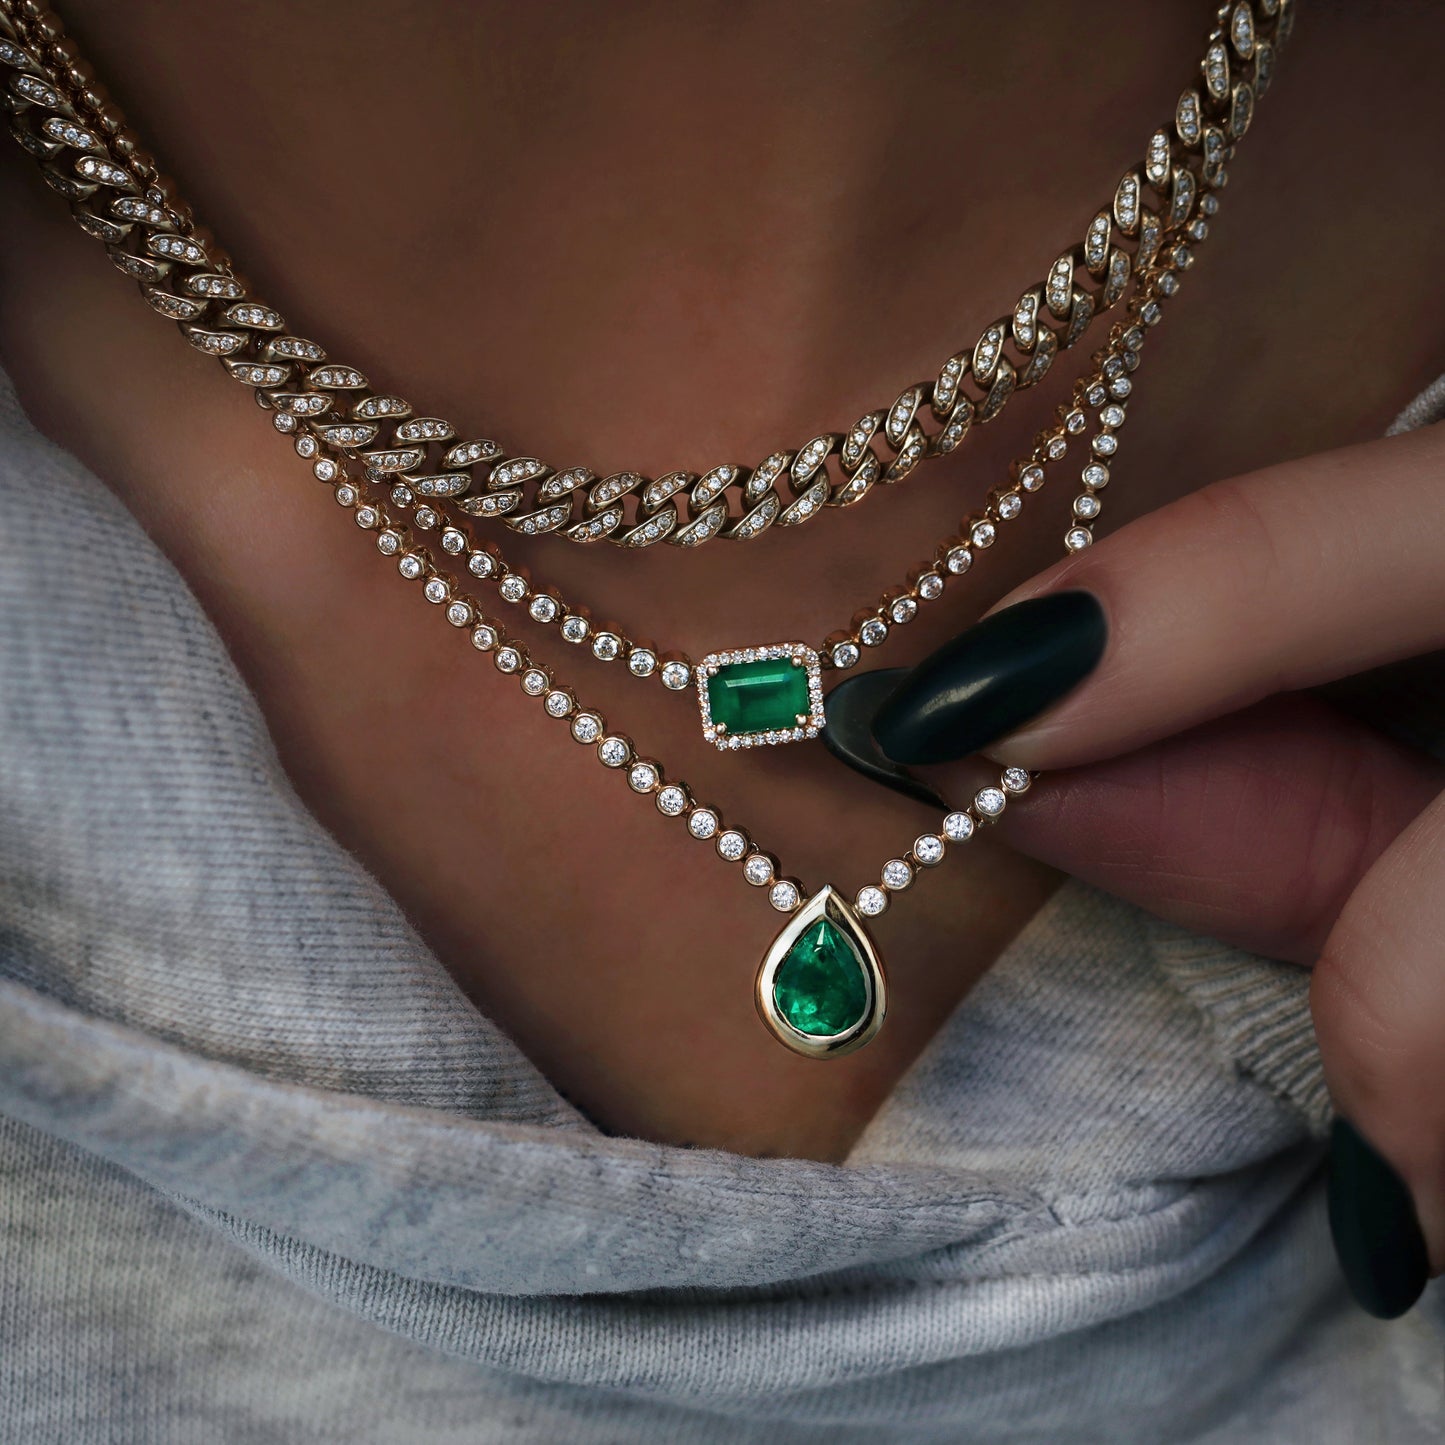 14kt gold and diamond teardrop emerald bezel necklace